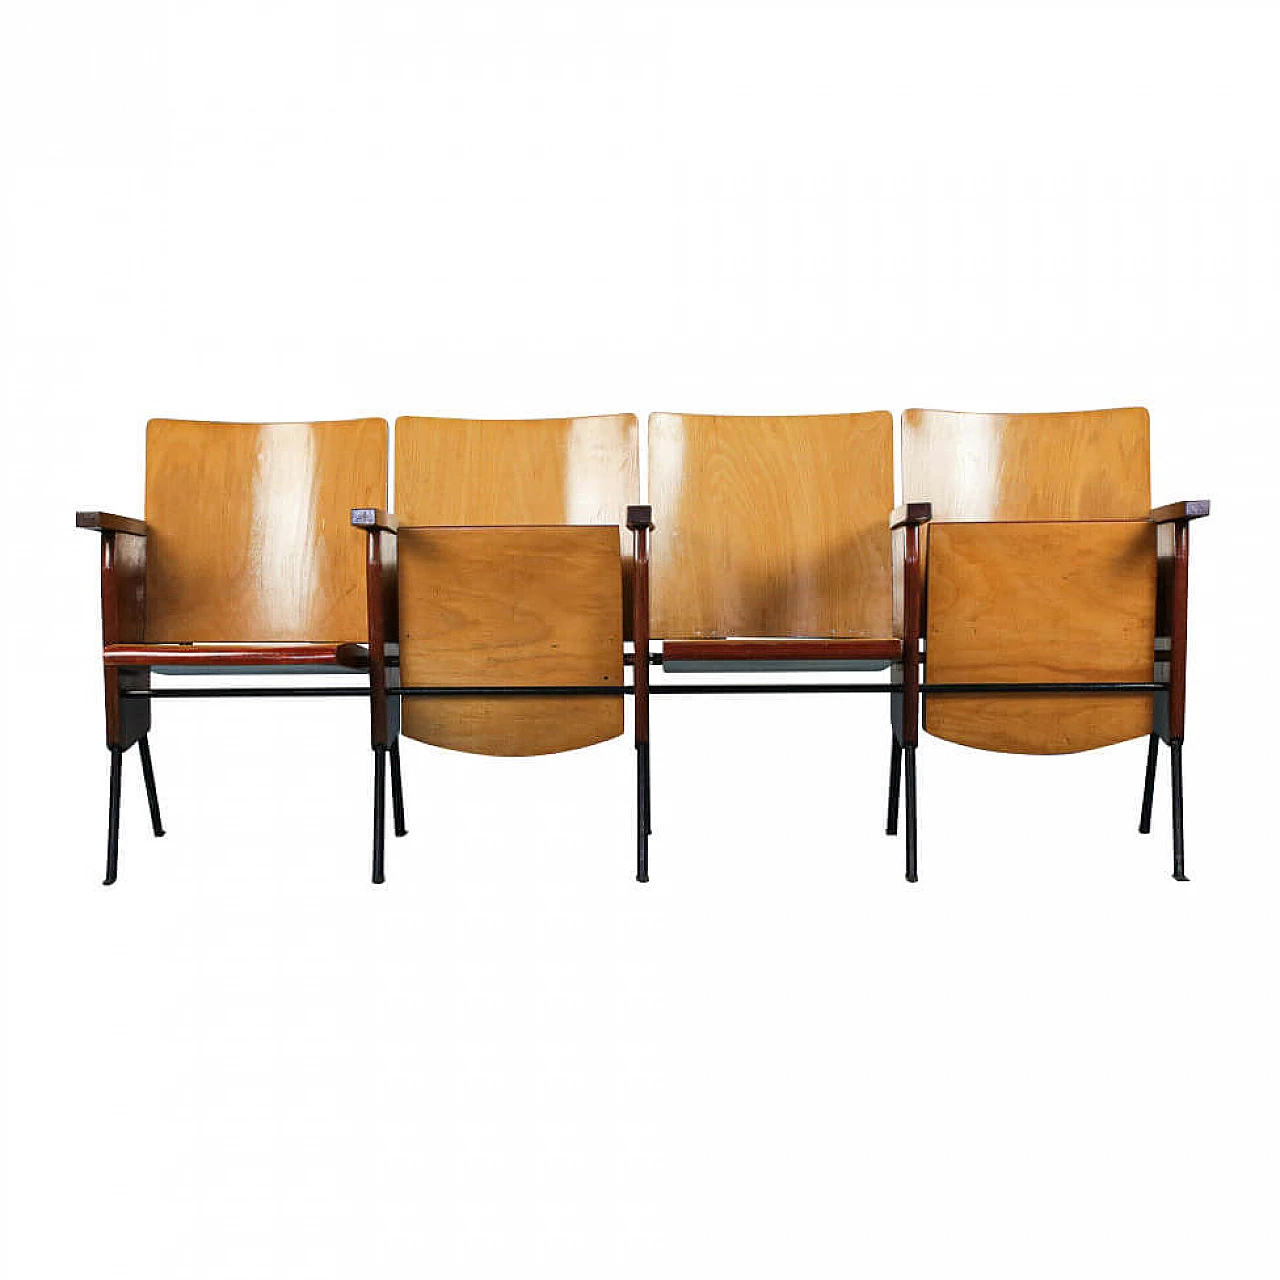 Row of 4 wooden cinema armchairs, 1960s 1118563